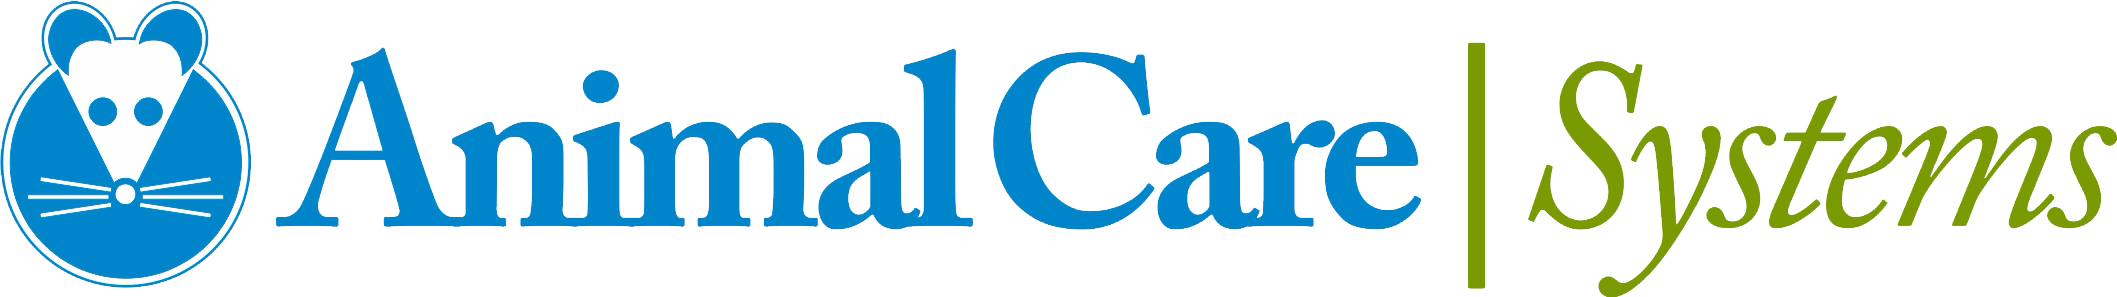 Official ACS Logo Pantone Coated RGB clipped